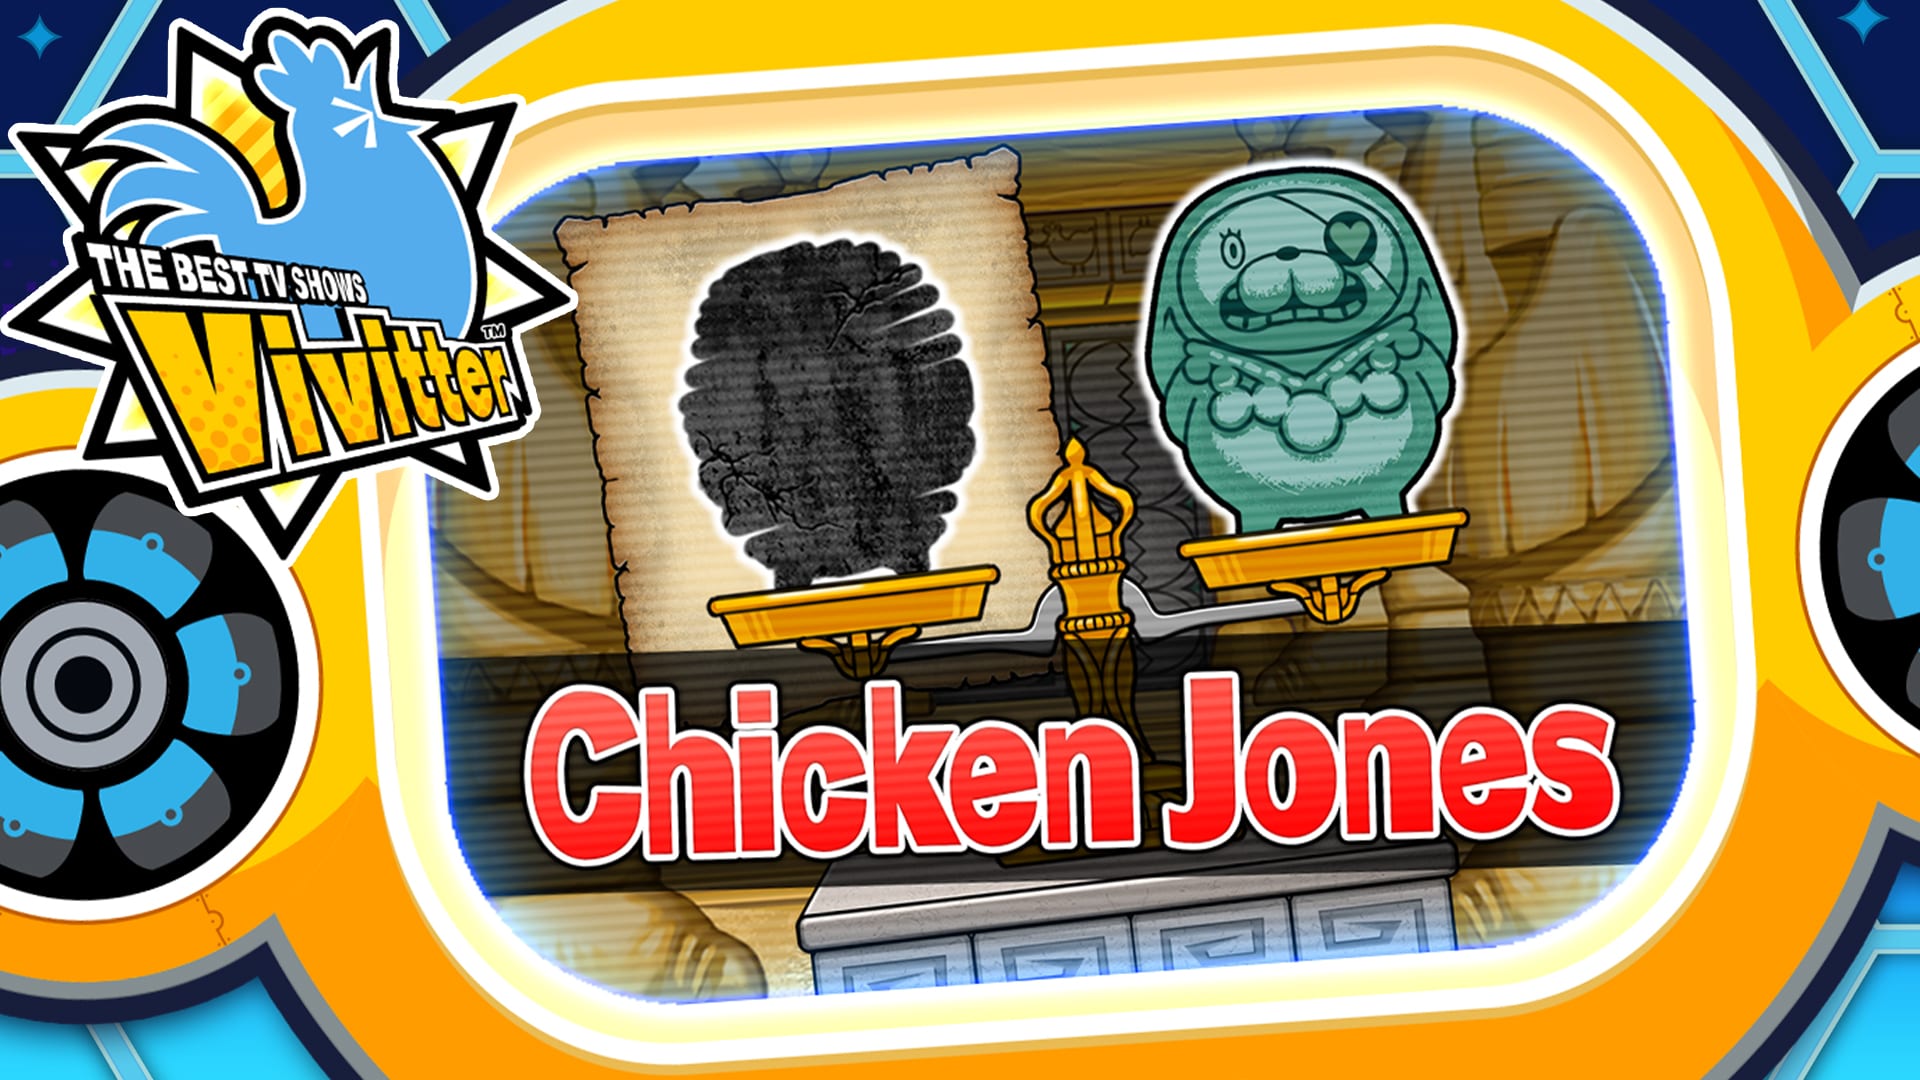 Additional mini-game "Chicken Jones"